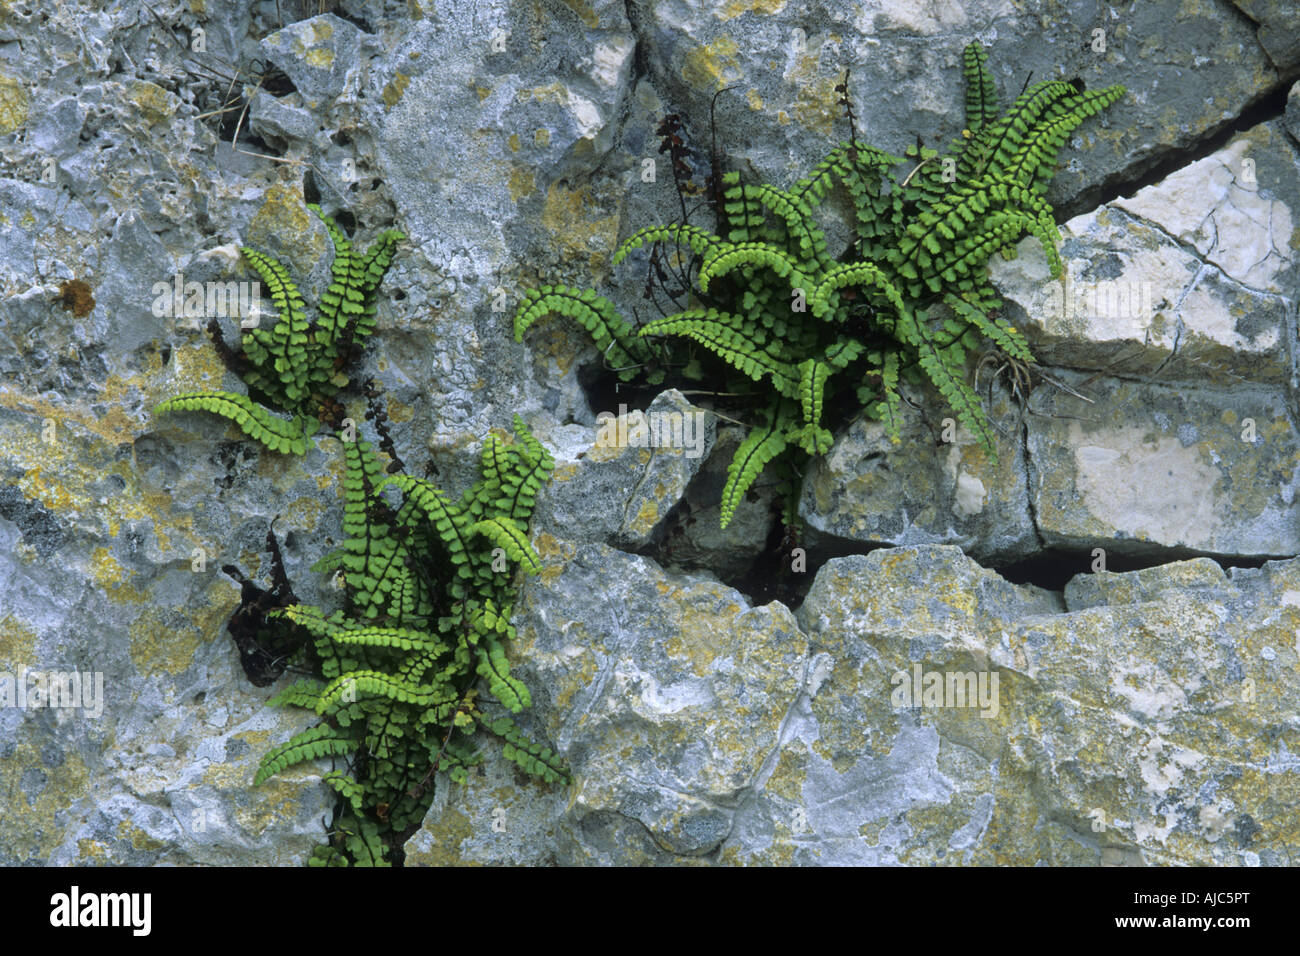 maidenhair spleenwort, common maidenhair (Asplenium trichomanes), at a wall Stock Photo